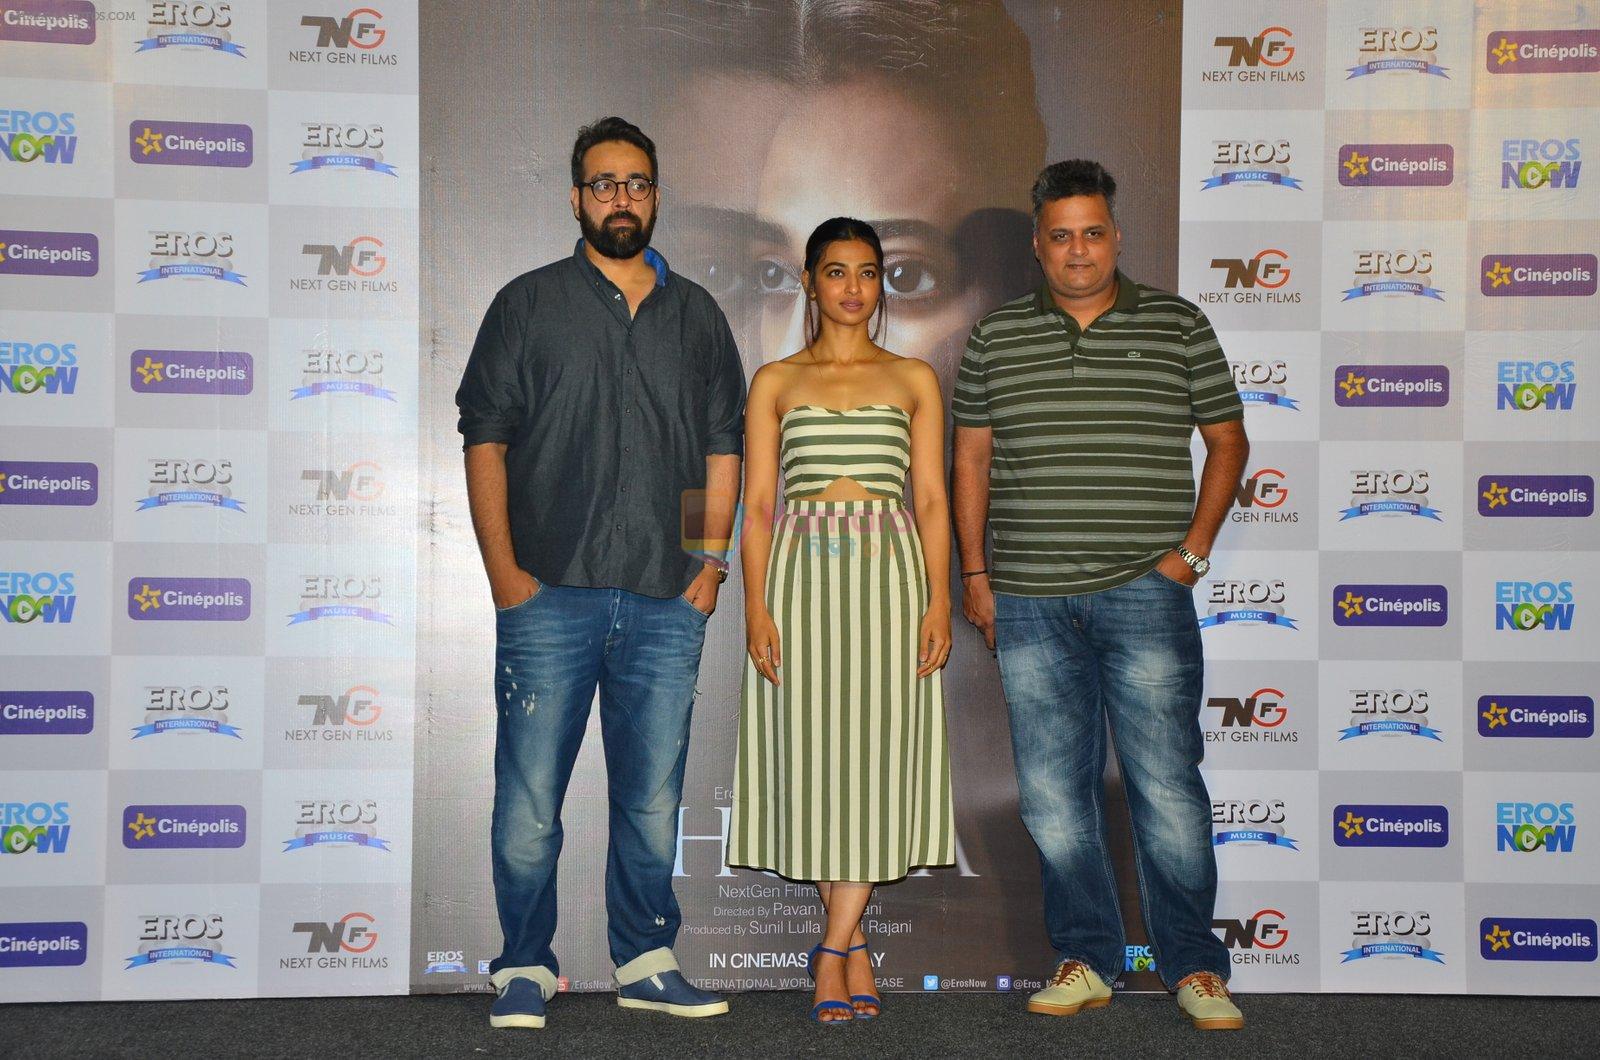 Radhika Apte promotes The Phobia film in Mumbai on 18th May 2016